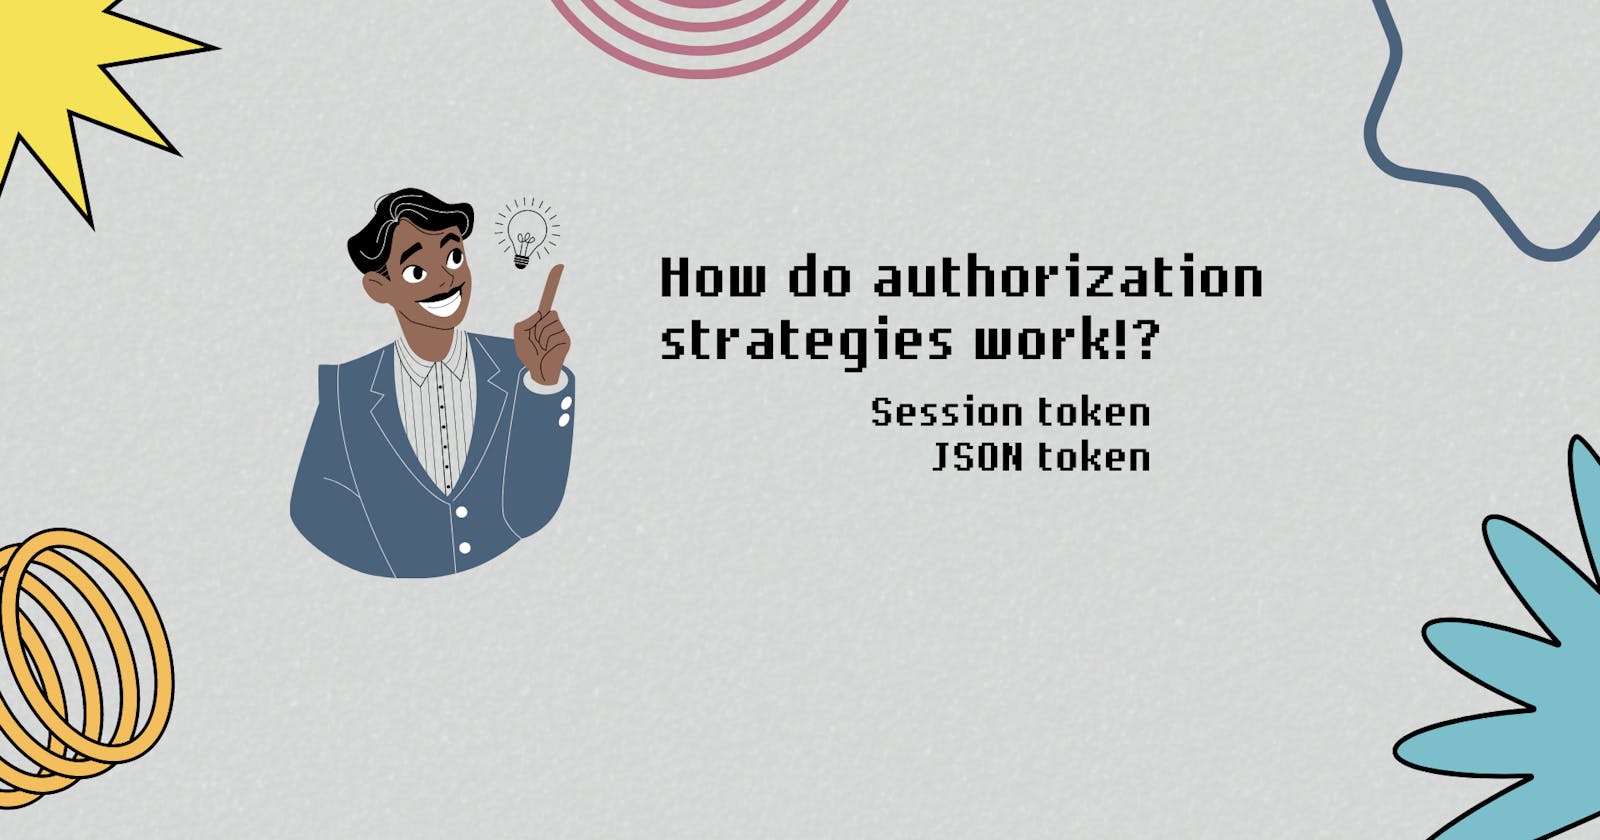 Let's discuss authorization strategies!!